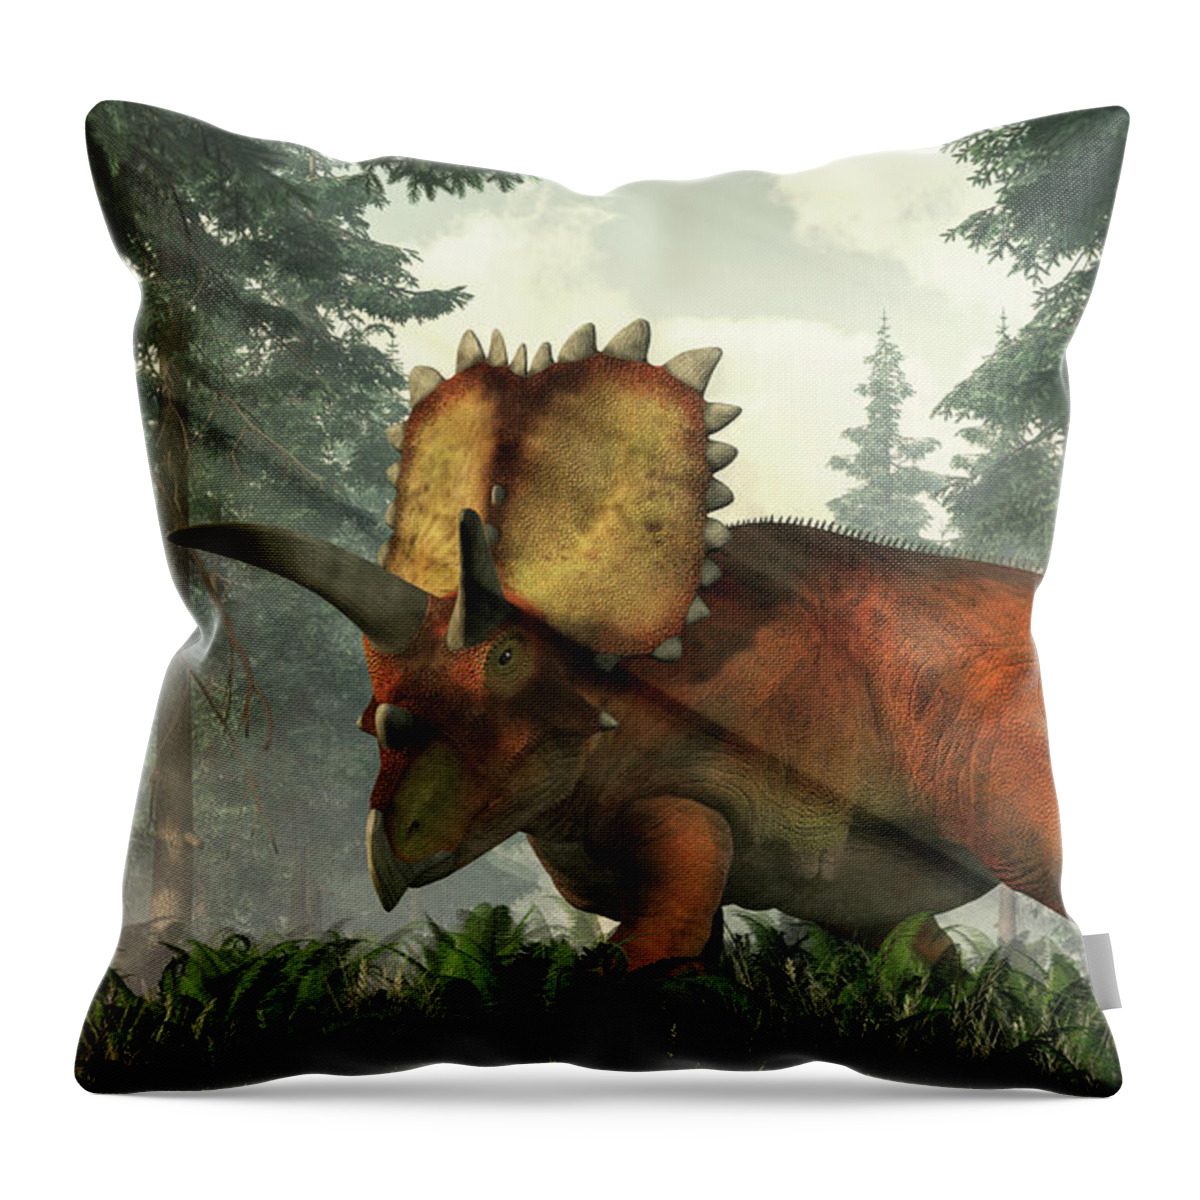 Coahuilaceratops Throw Pillow featuring the digital art Coahuilaceratops by Daniel Eskridge